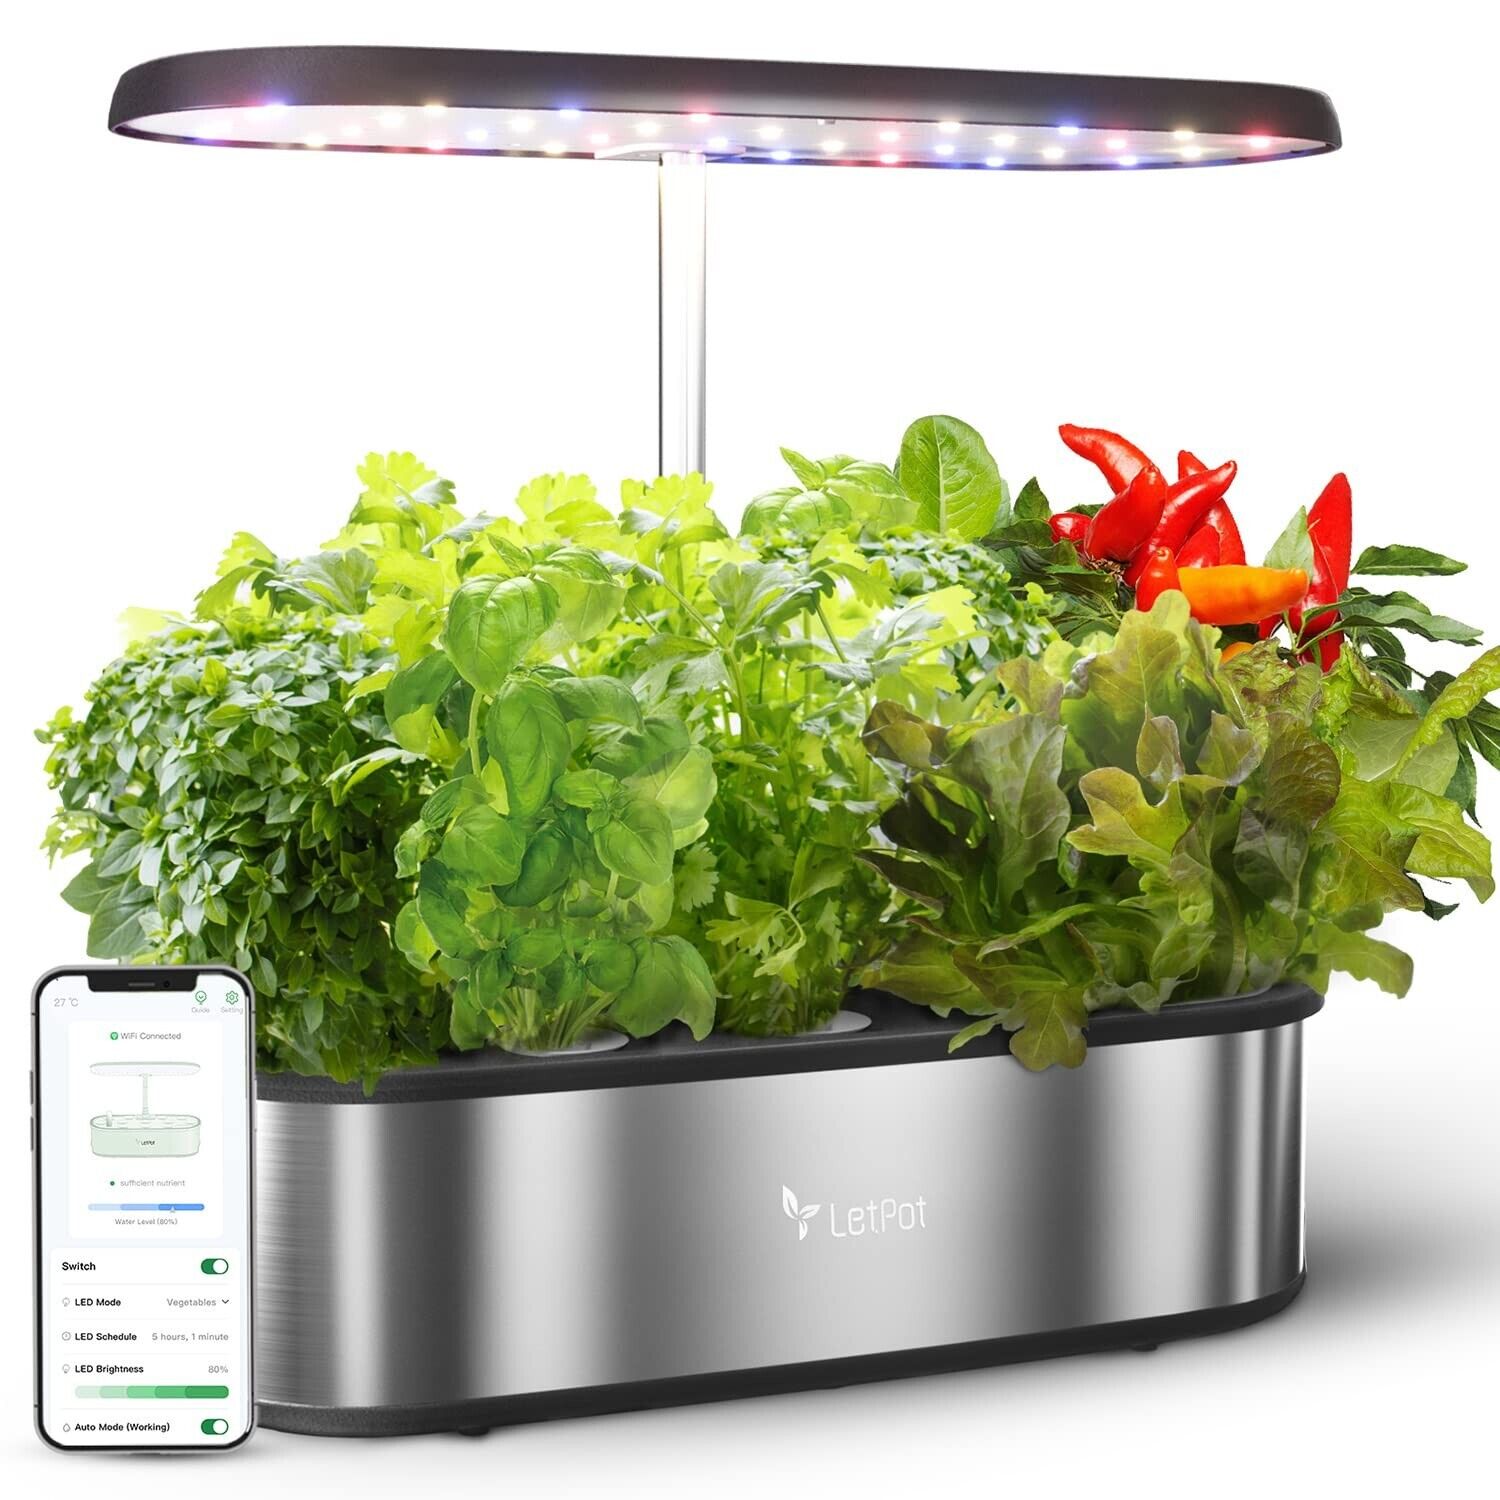 LetPot LPH-SE Hydroponics Growing System, 12 Pods Smart Herb Garden Kit Indoo...